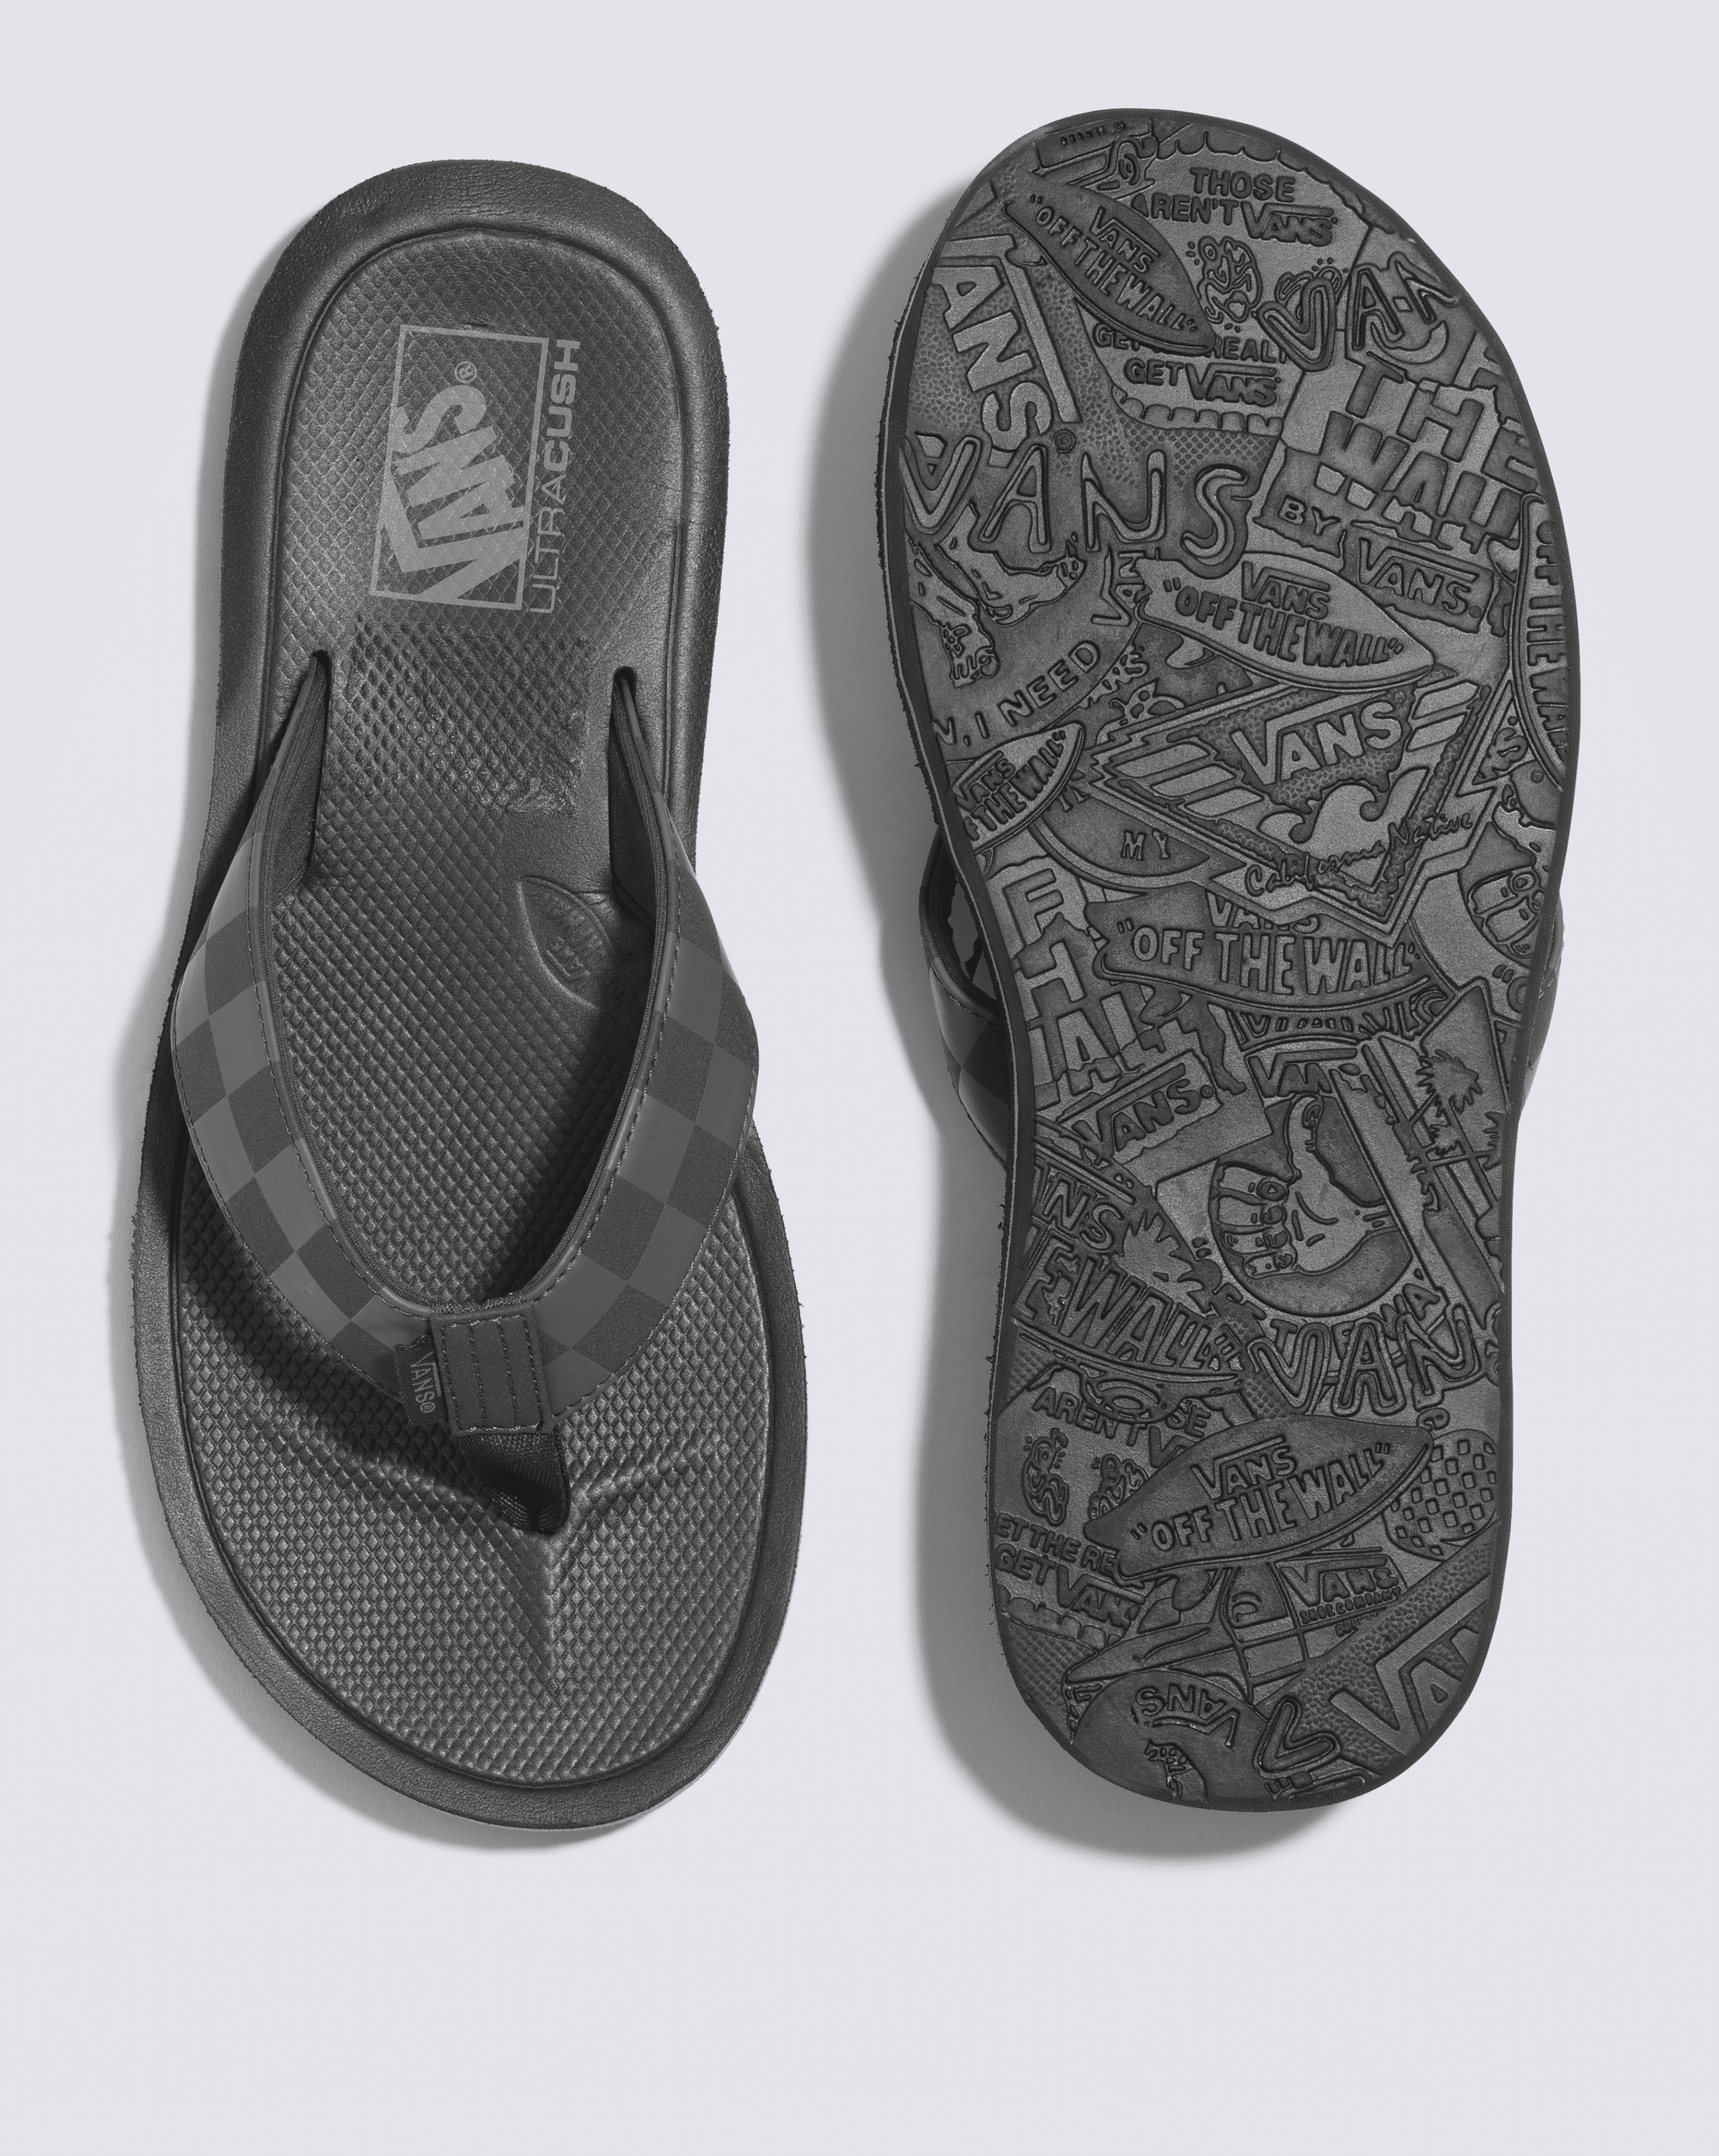 VANS Nexpa Synthetic Sandals Checkerboard Unexplored Men's Sandals Vans 